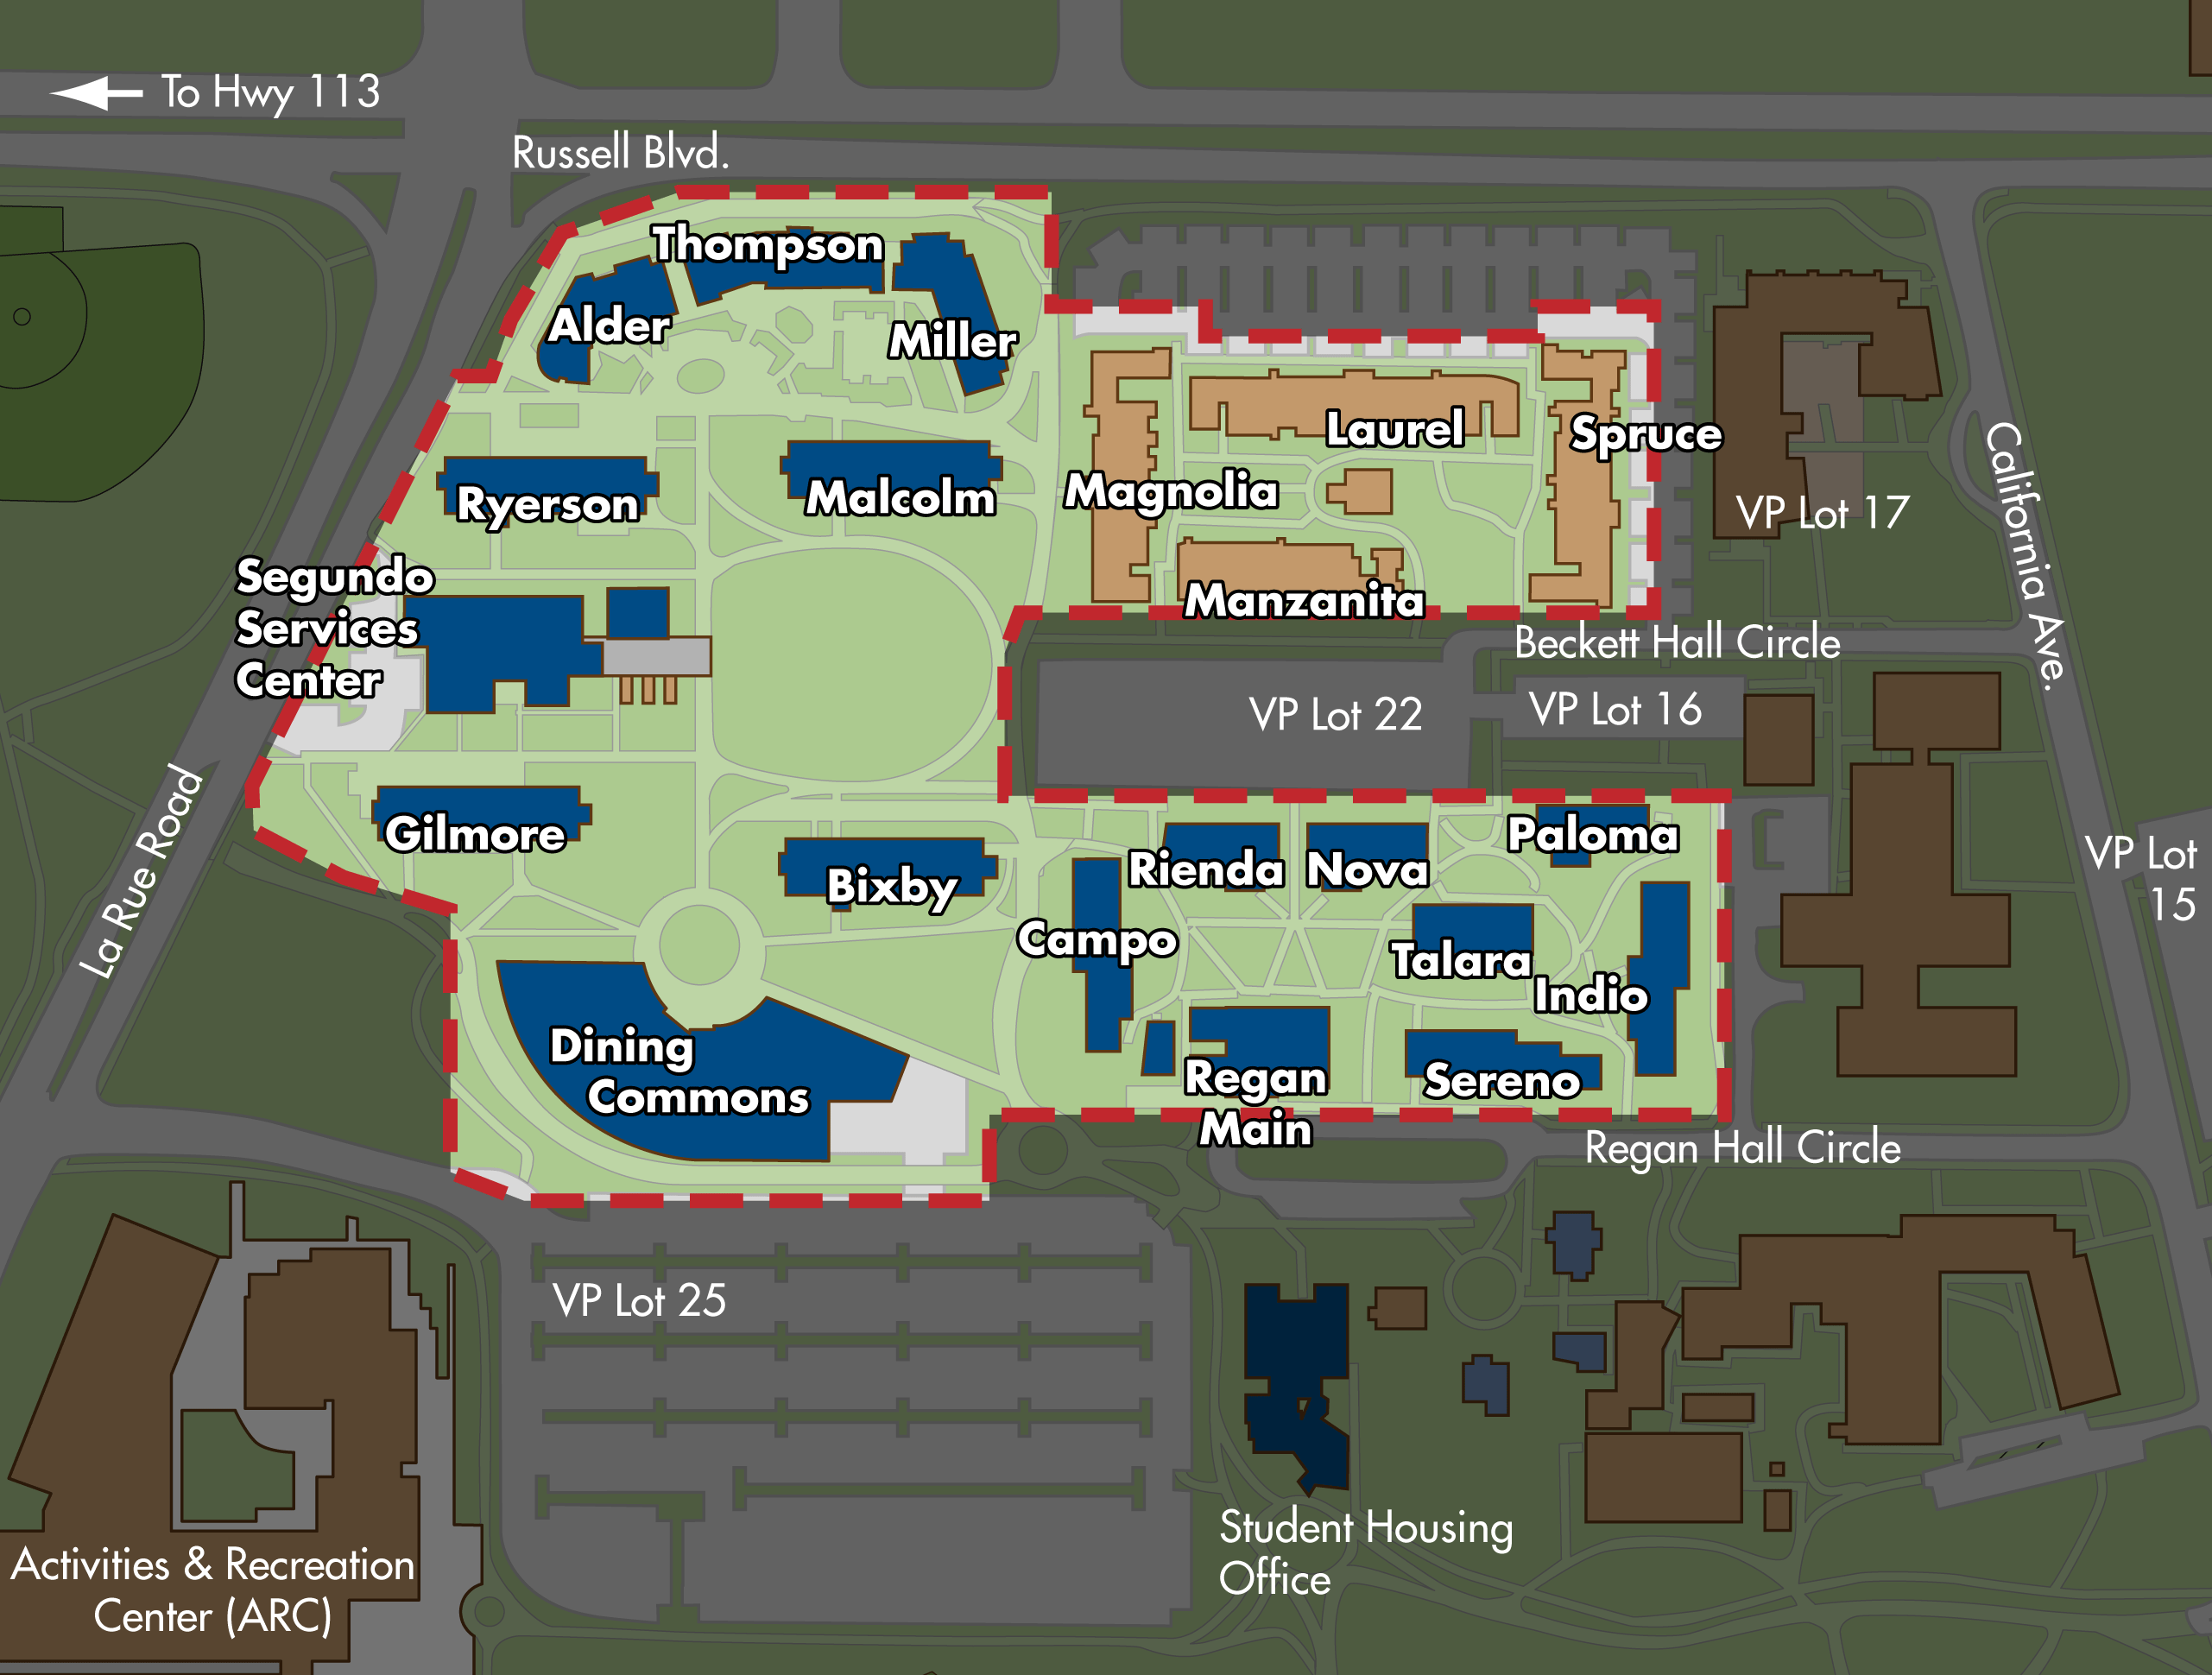 Map of the Segundo residence hall area